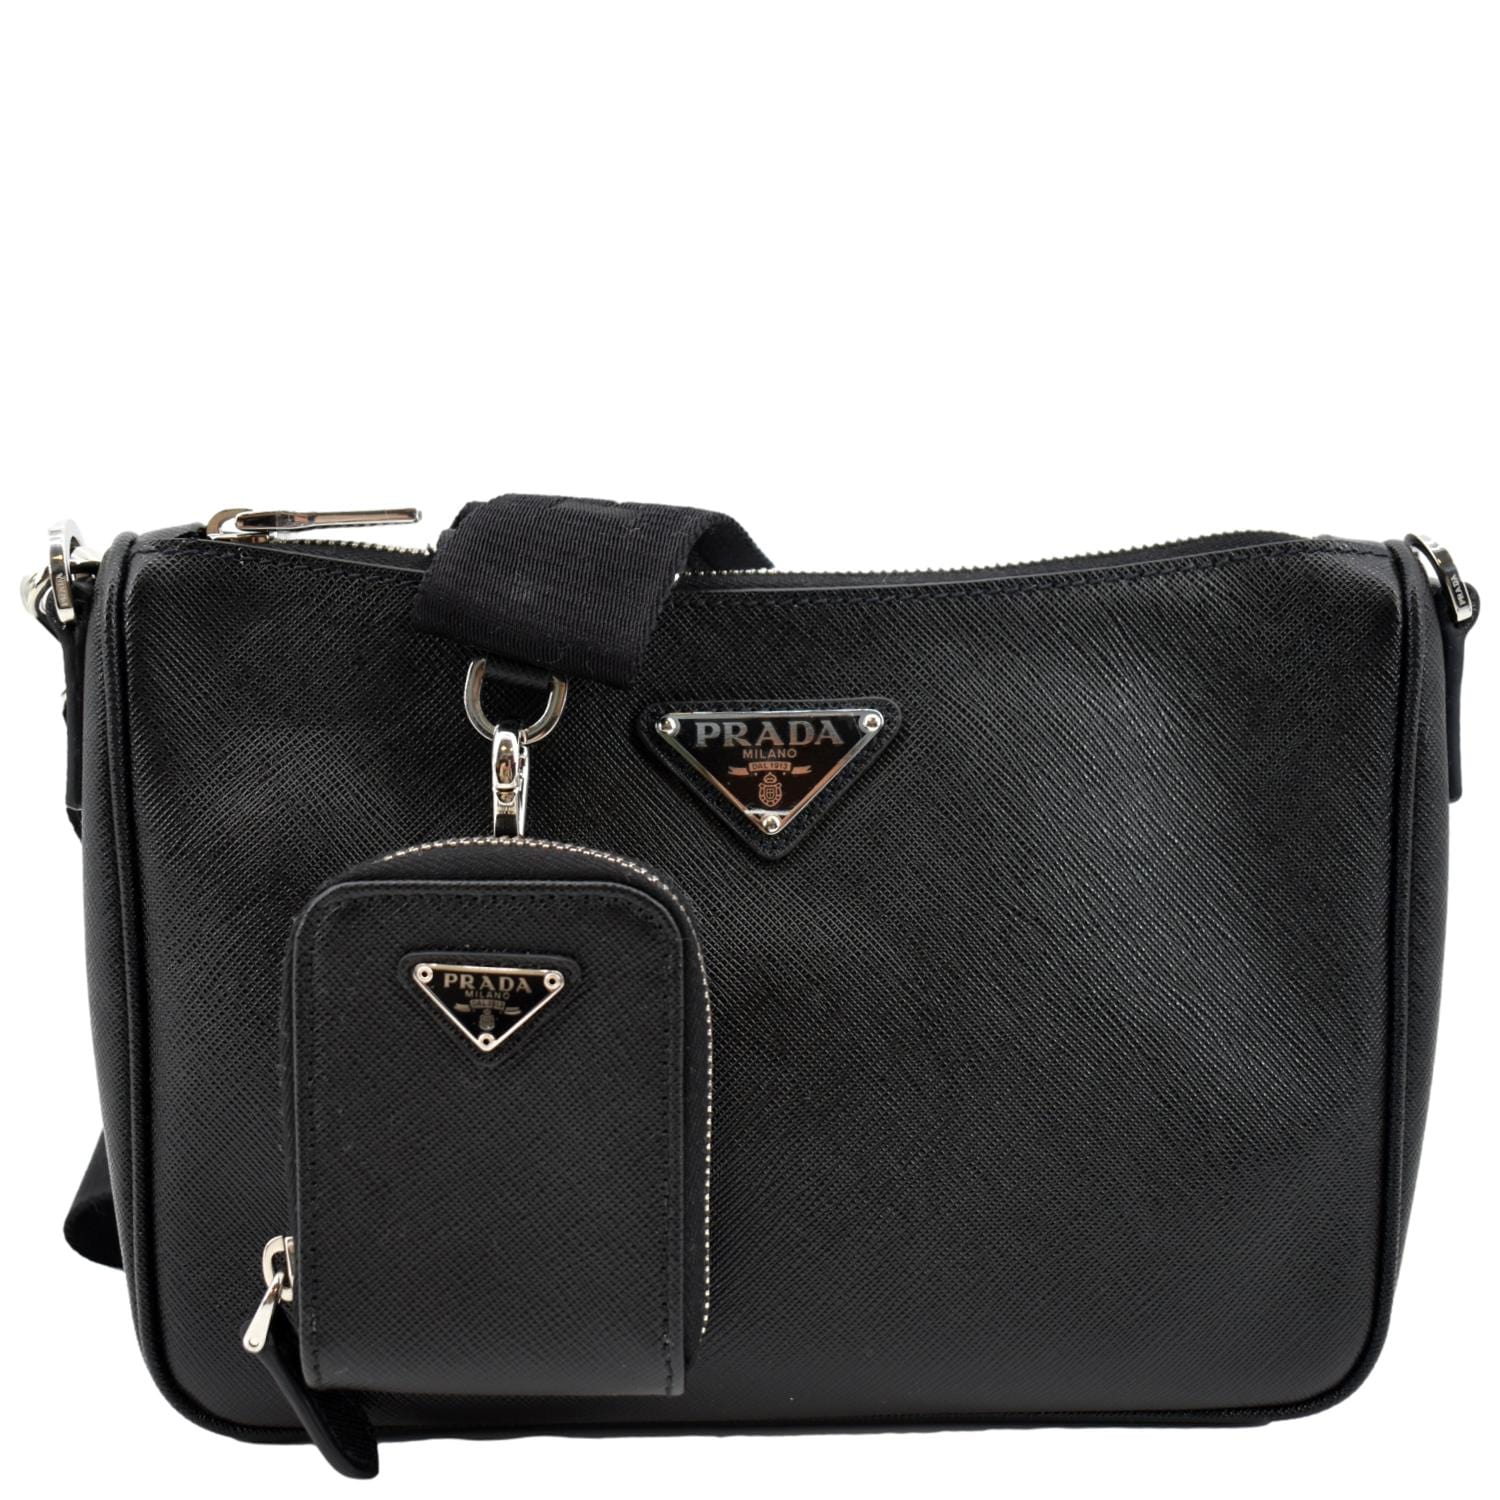 Re-Nylon and Saffiano Leather Shoulder Bag Black , Black, One Size